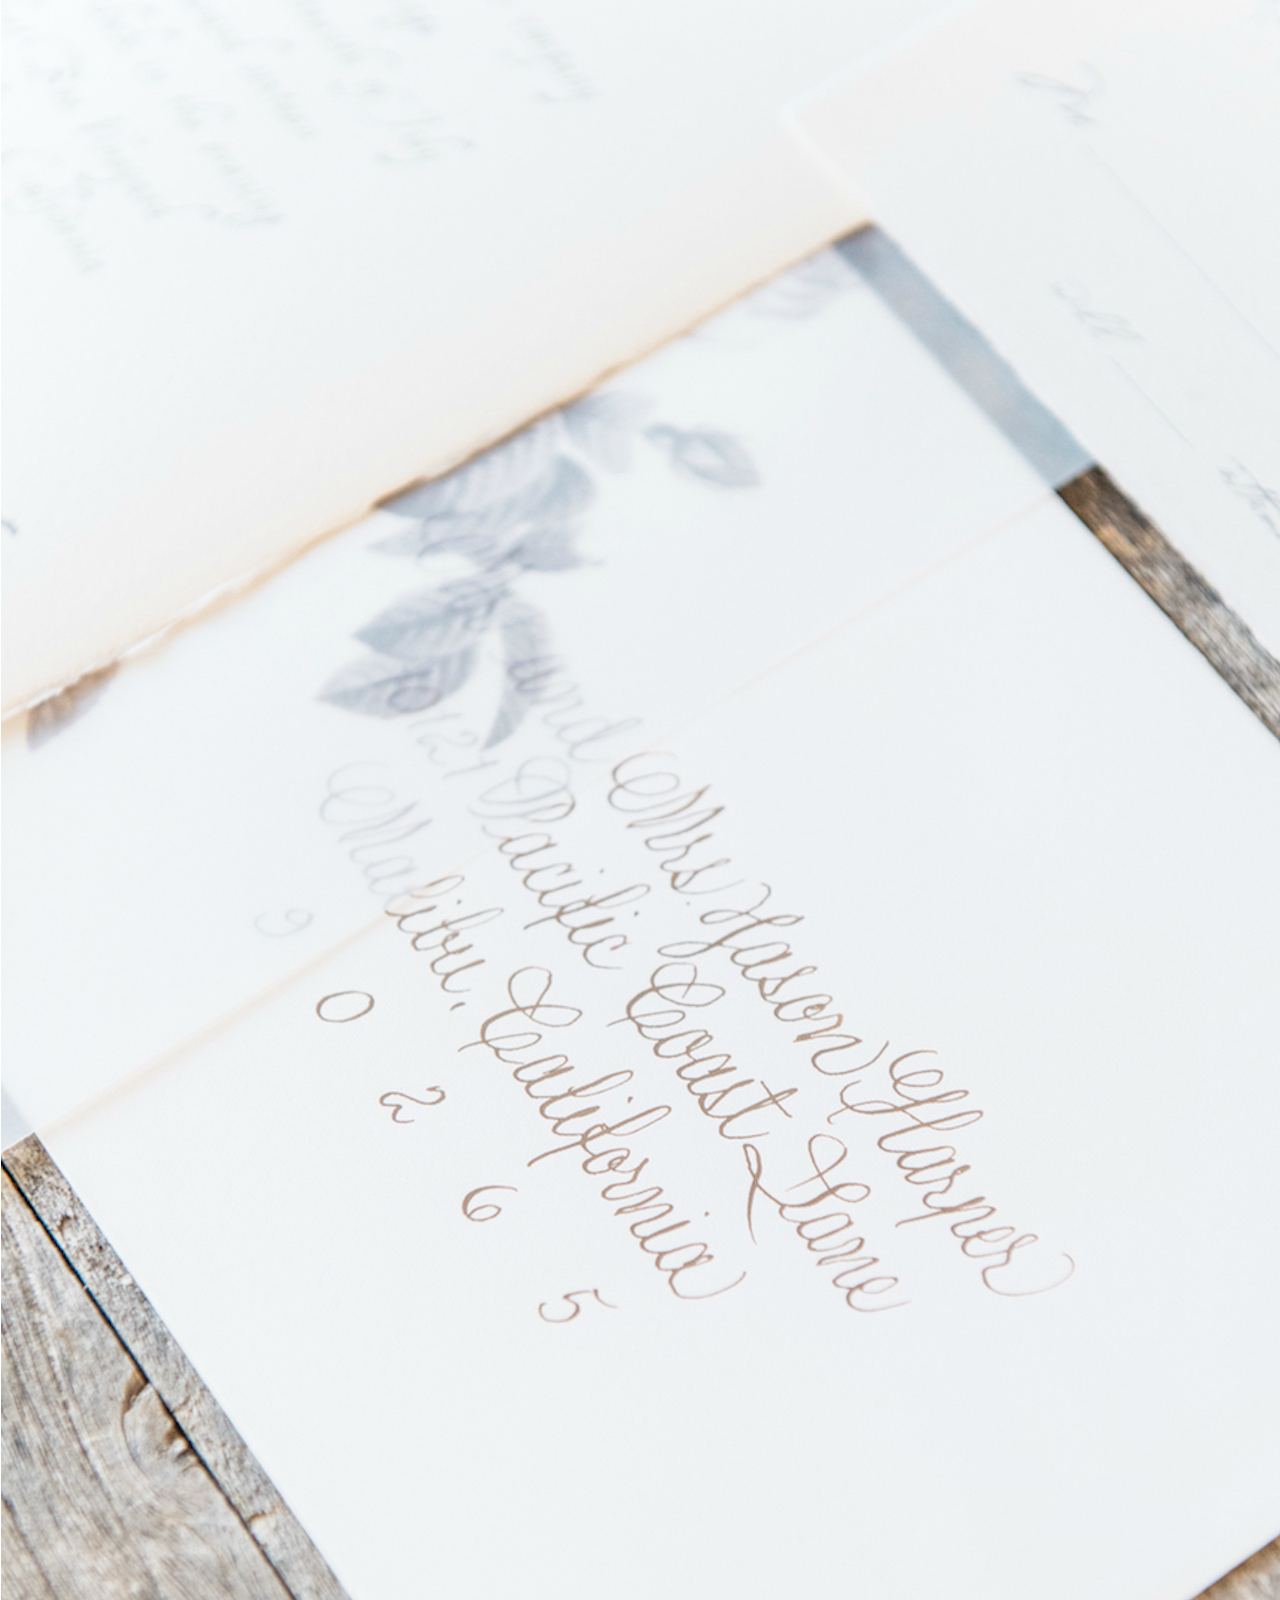 Harper Handmade Paper Wedding Invitation Suite, Deckled Edge Paper